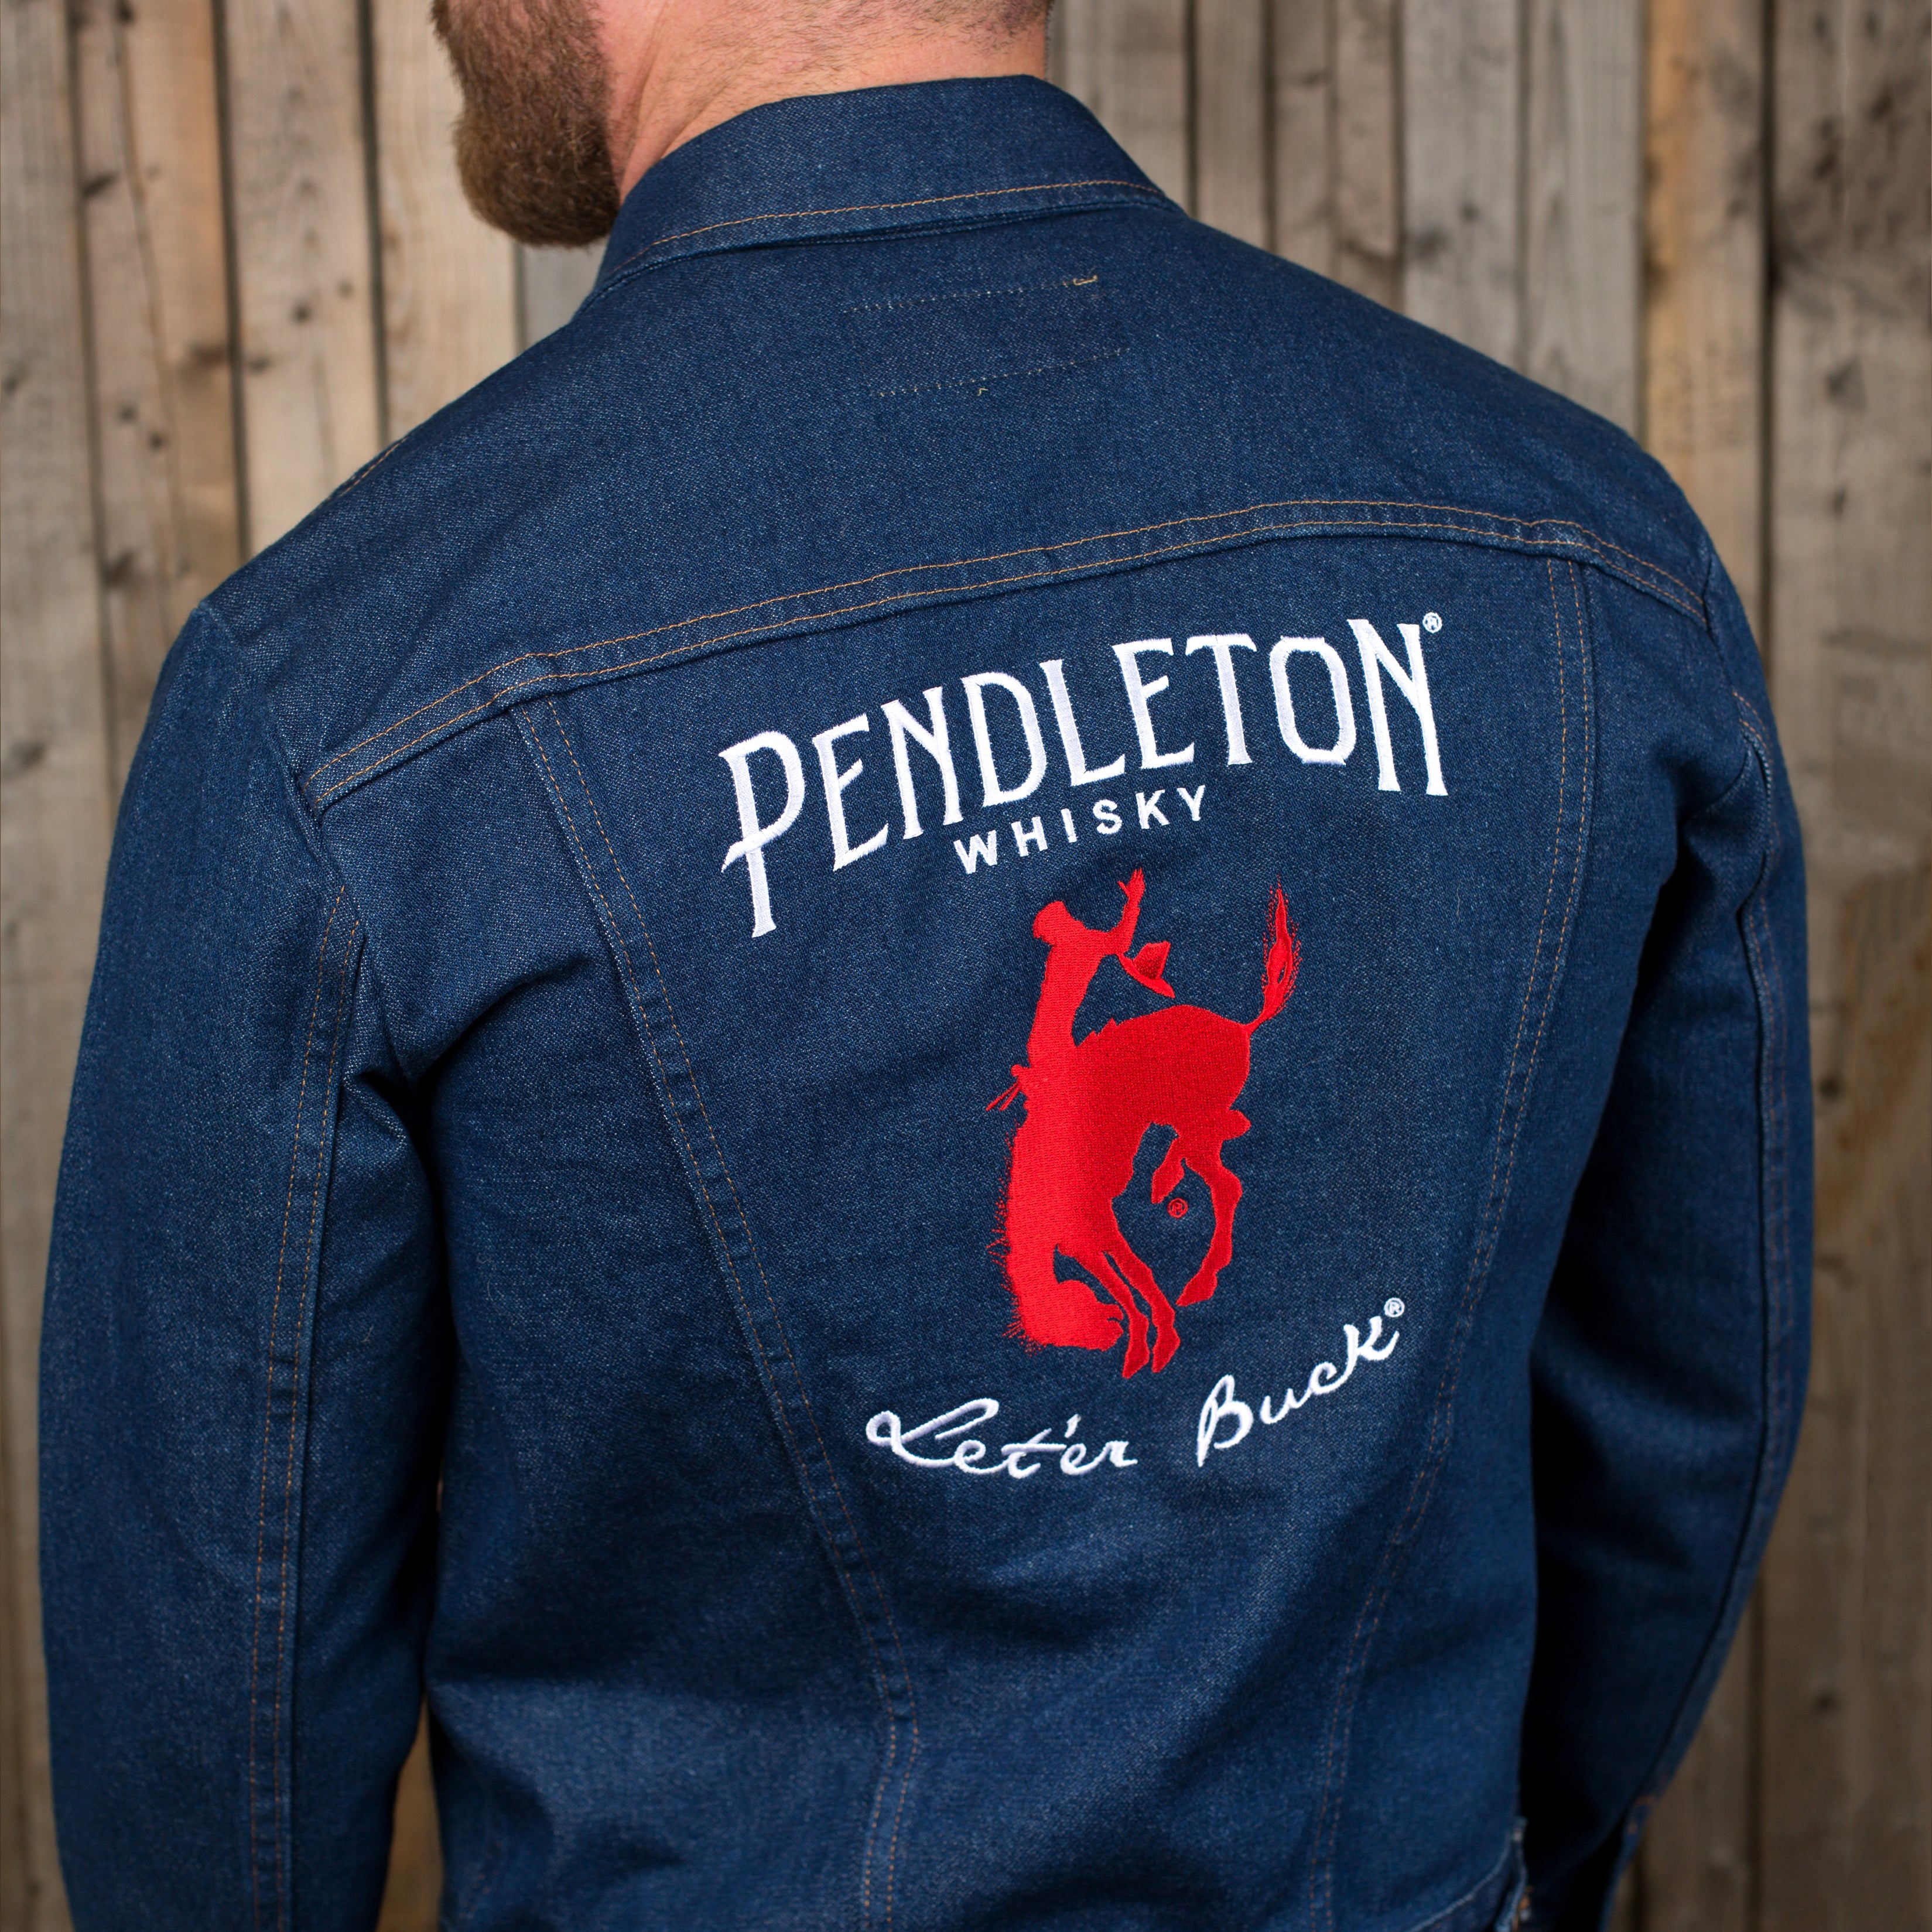 Your Levi's Jean Jacket Just Got a Pendleton Upgrade